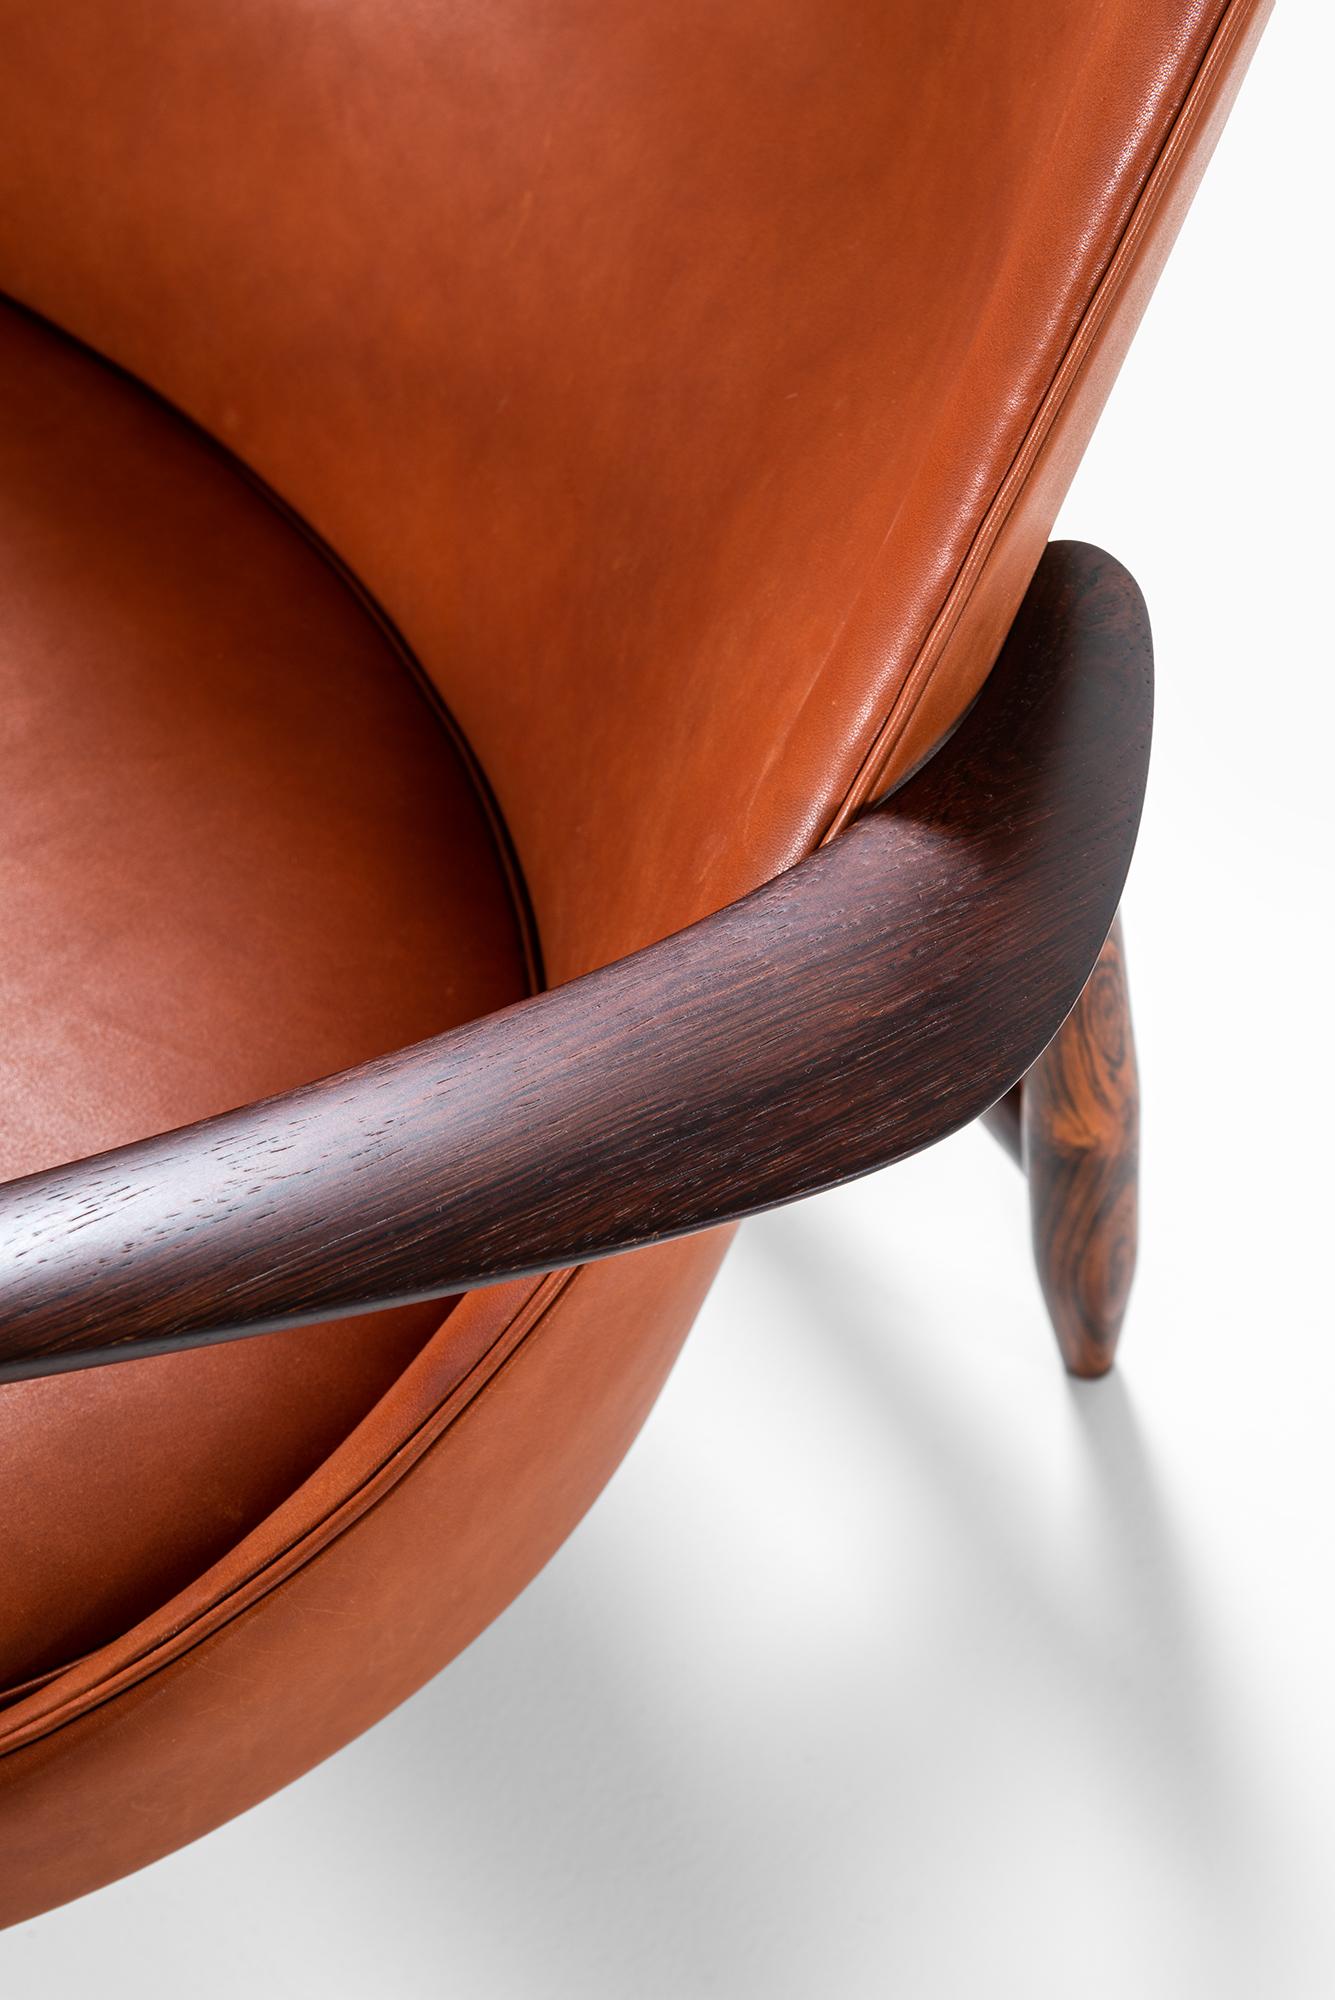 Leather Ib Kofod-Larsen Elizabeth Easy Chairs by Christensen & Larsen in Denmark